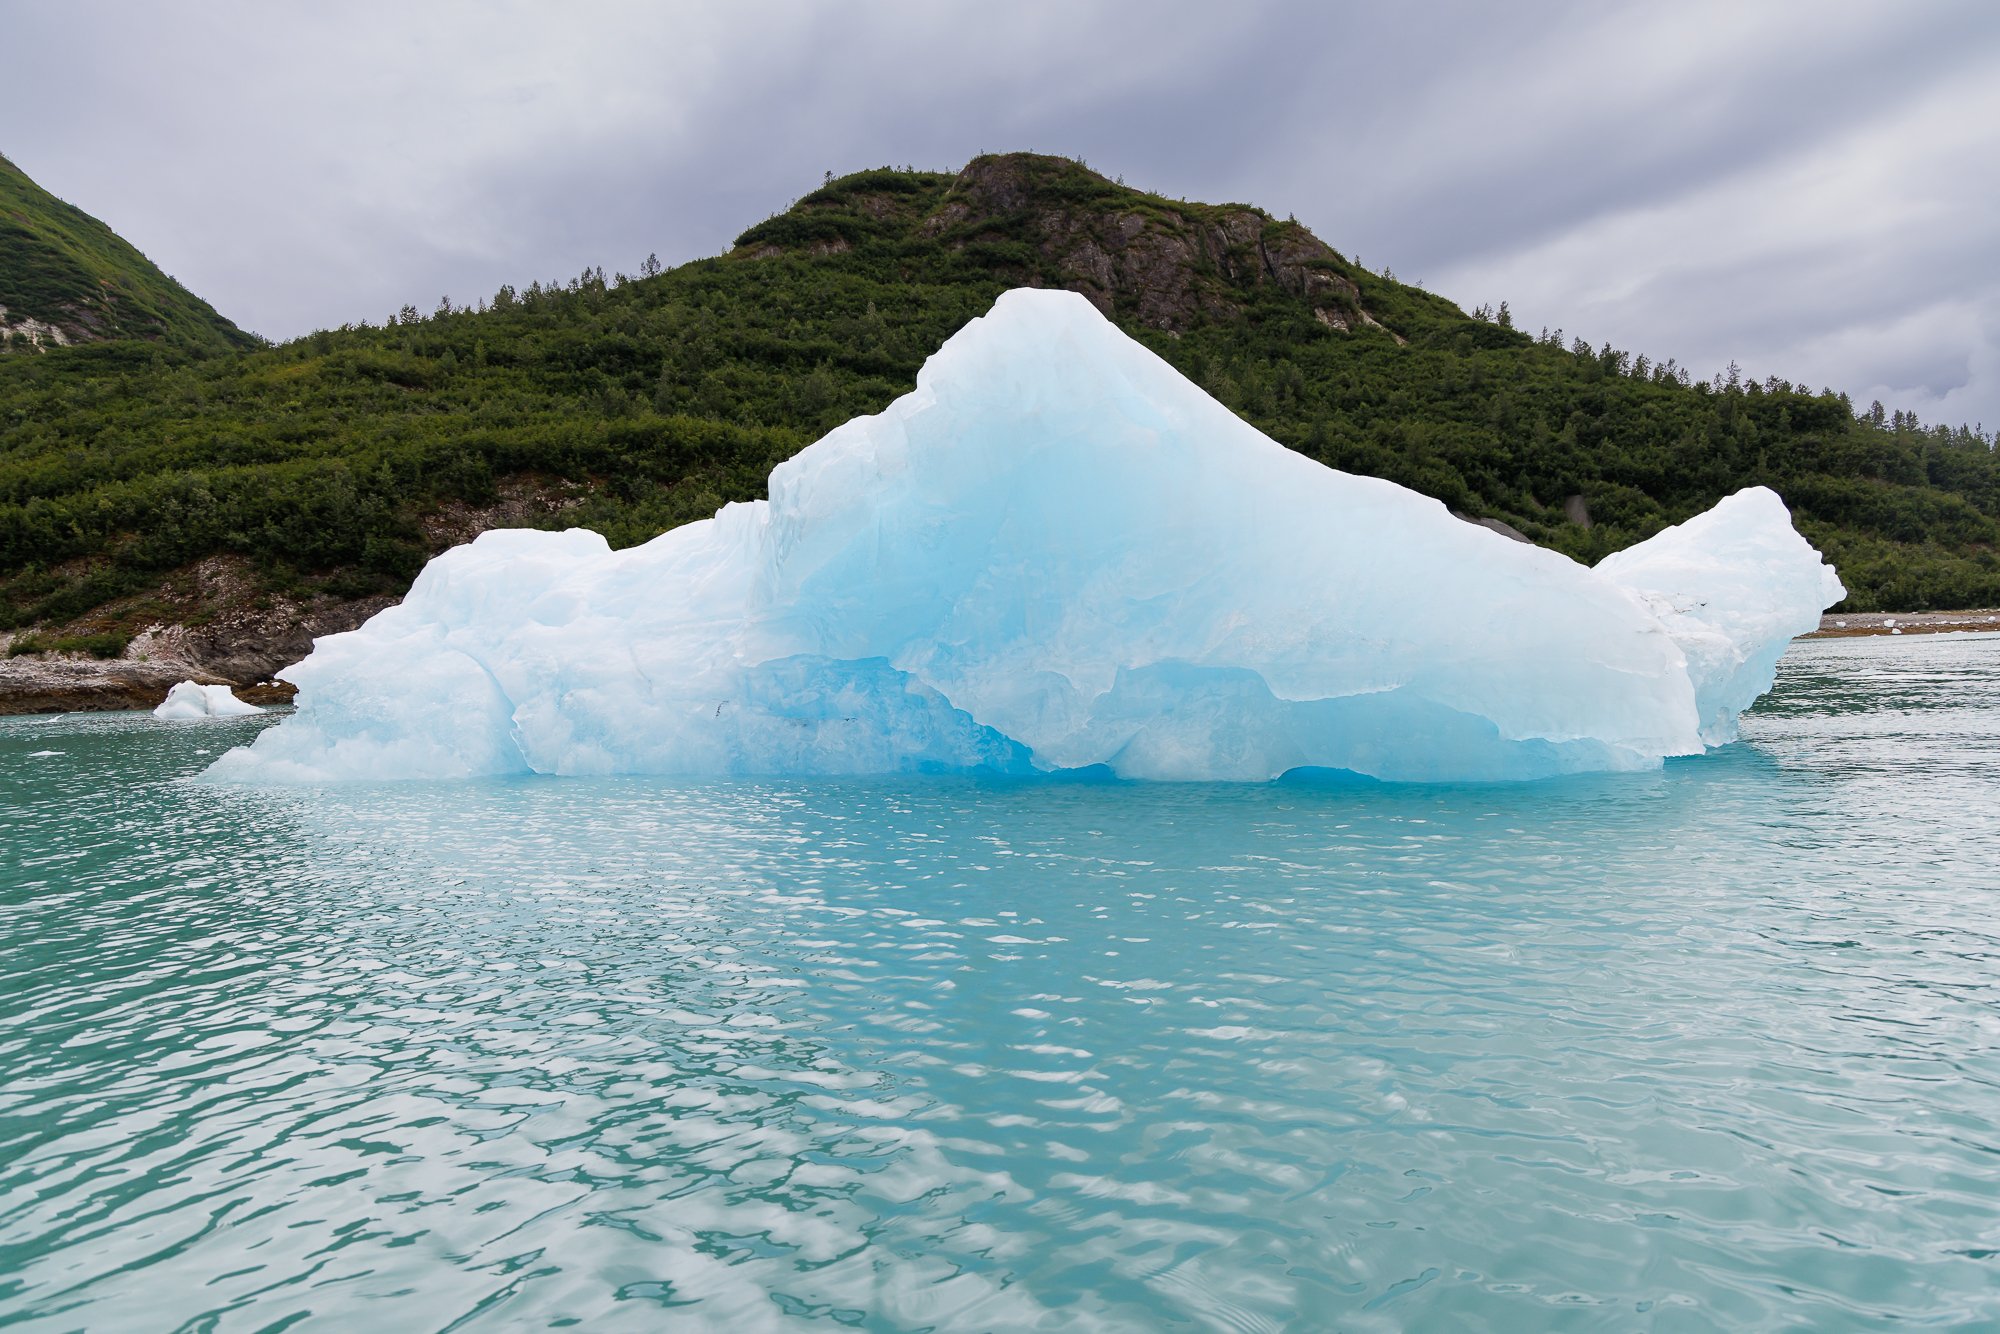 ice-burg-mountain-nature-©NadeenFlynnPhotography-3868.jpg